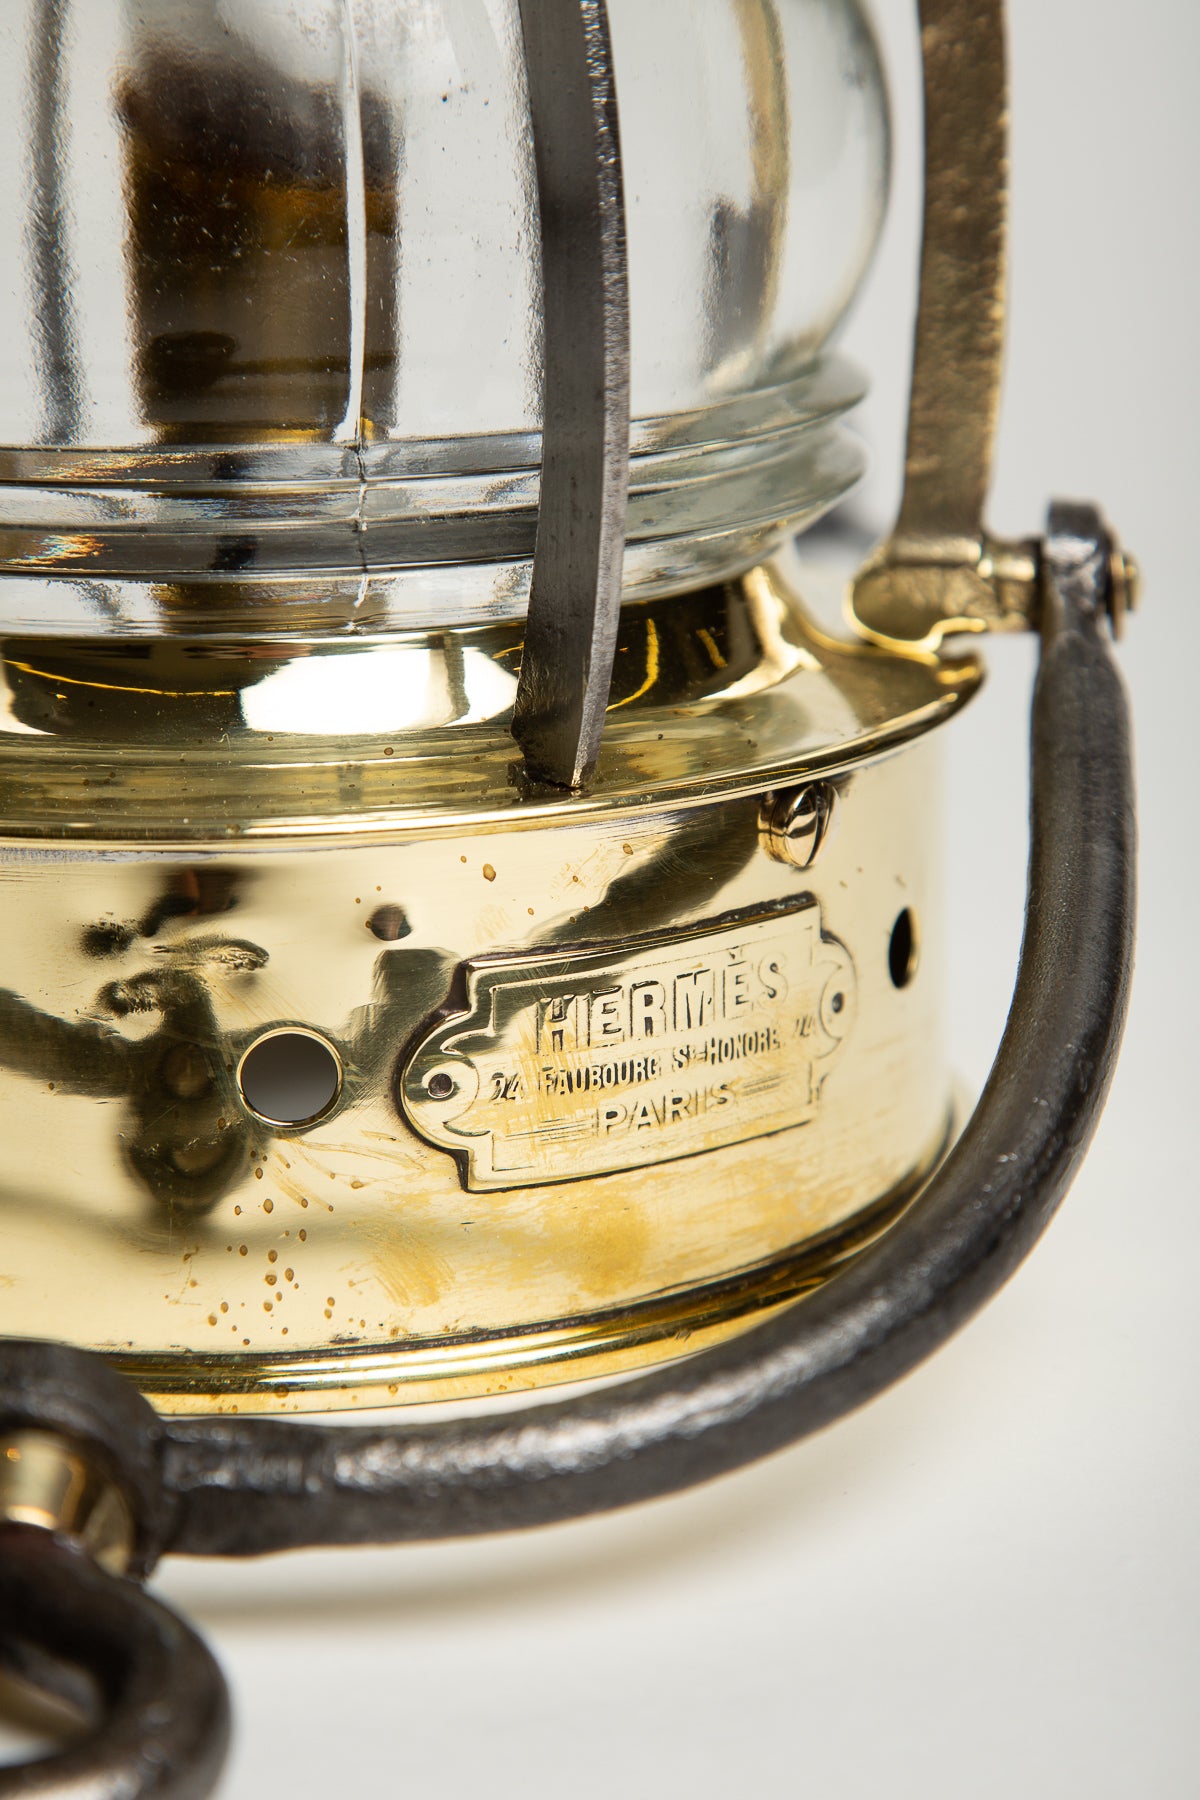 10 Polished Brass Anchor Nautical Oil Lantern